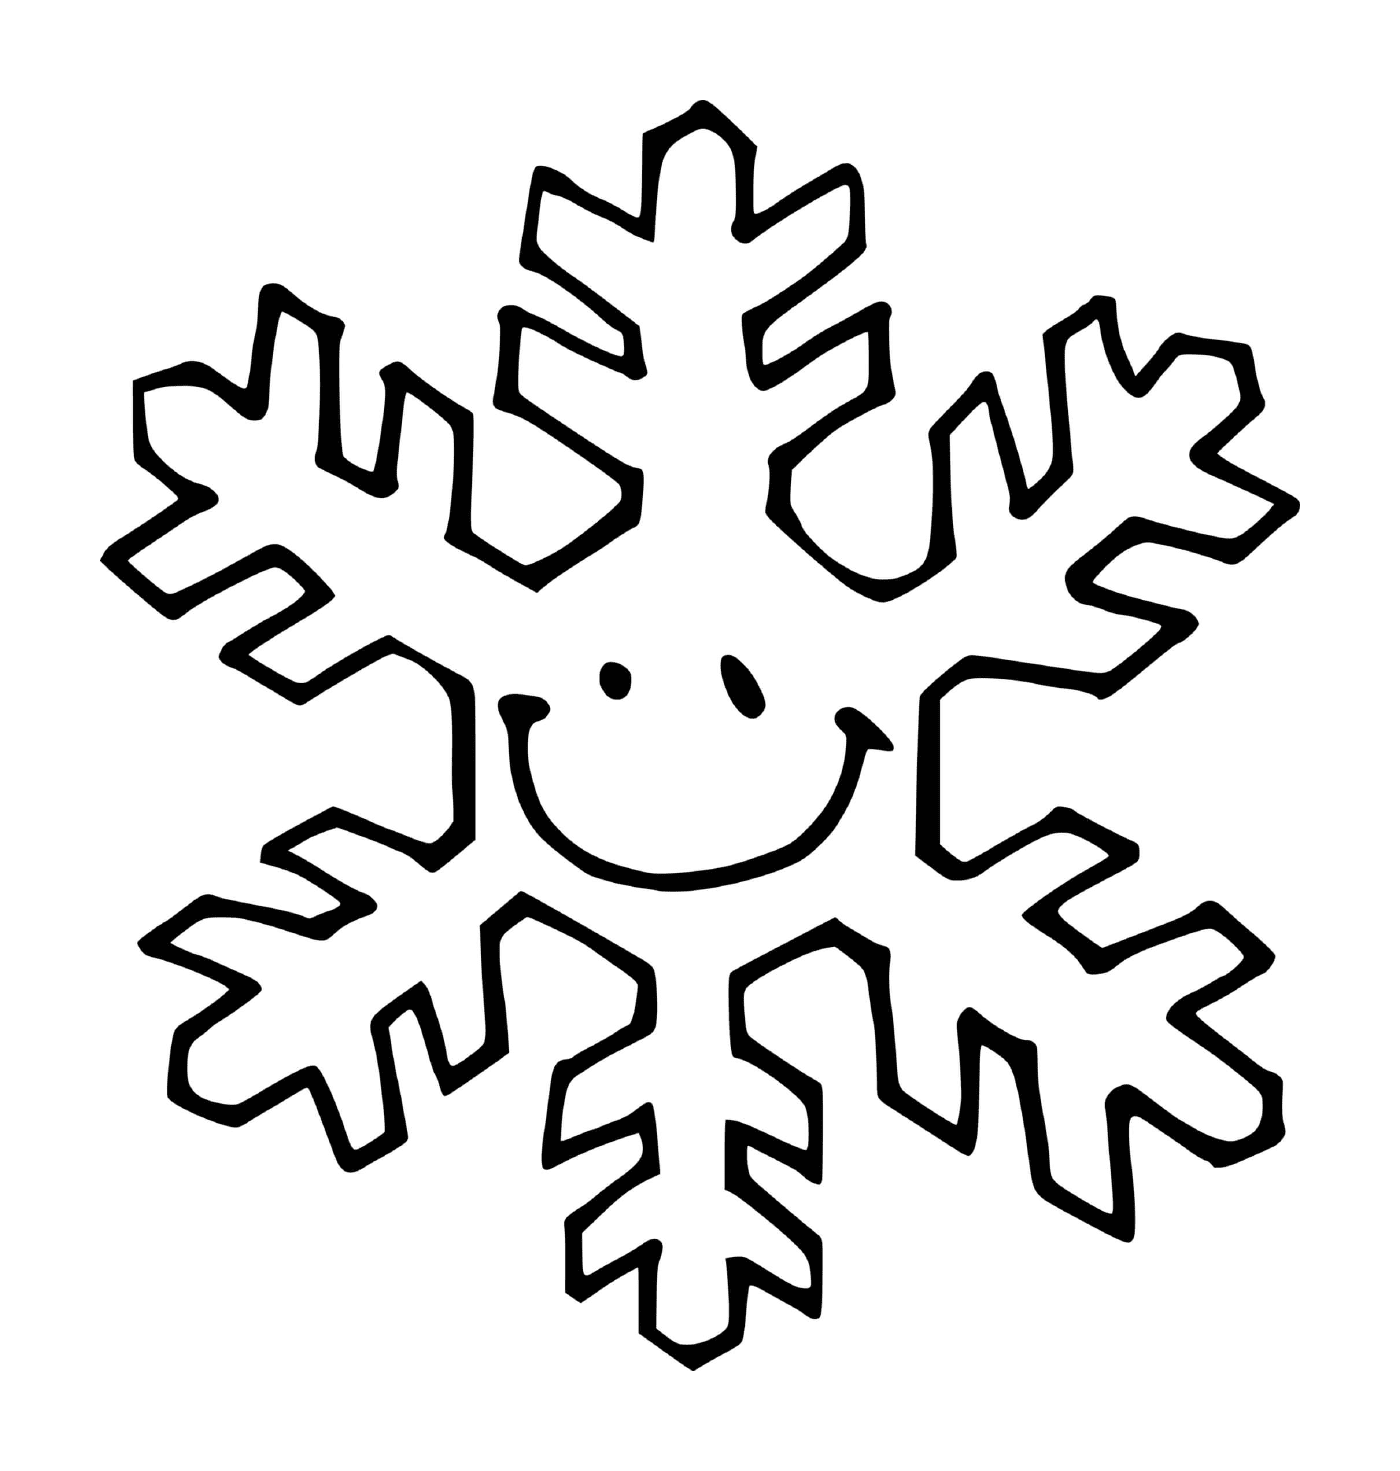  A smiling snowflake 